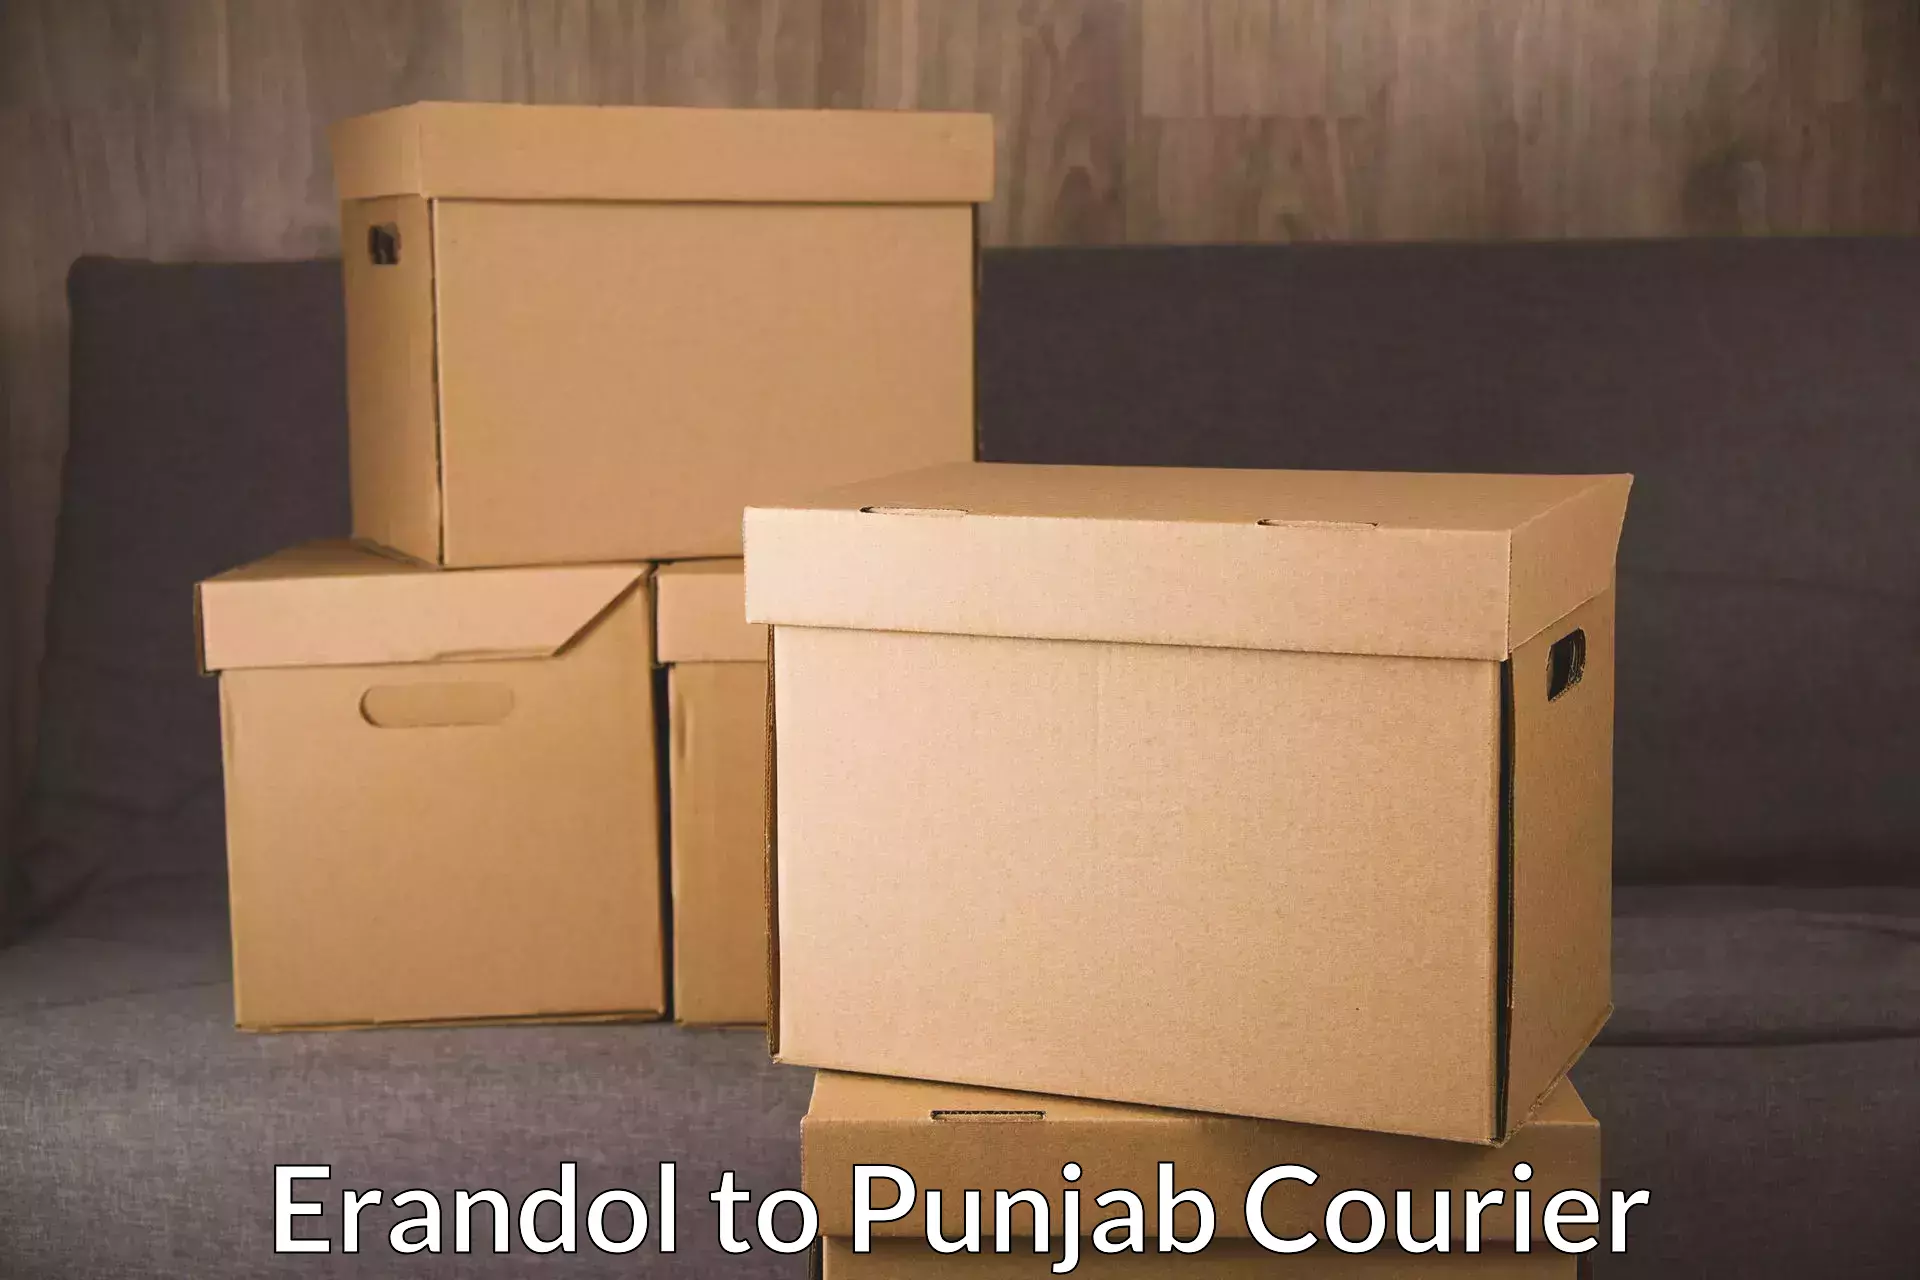 Logistics service provider Erandol to Punjab